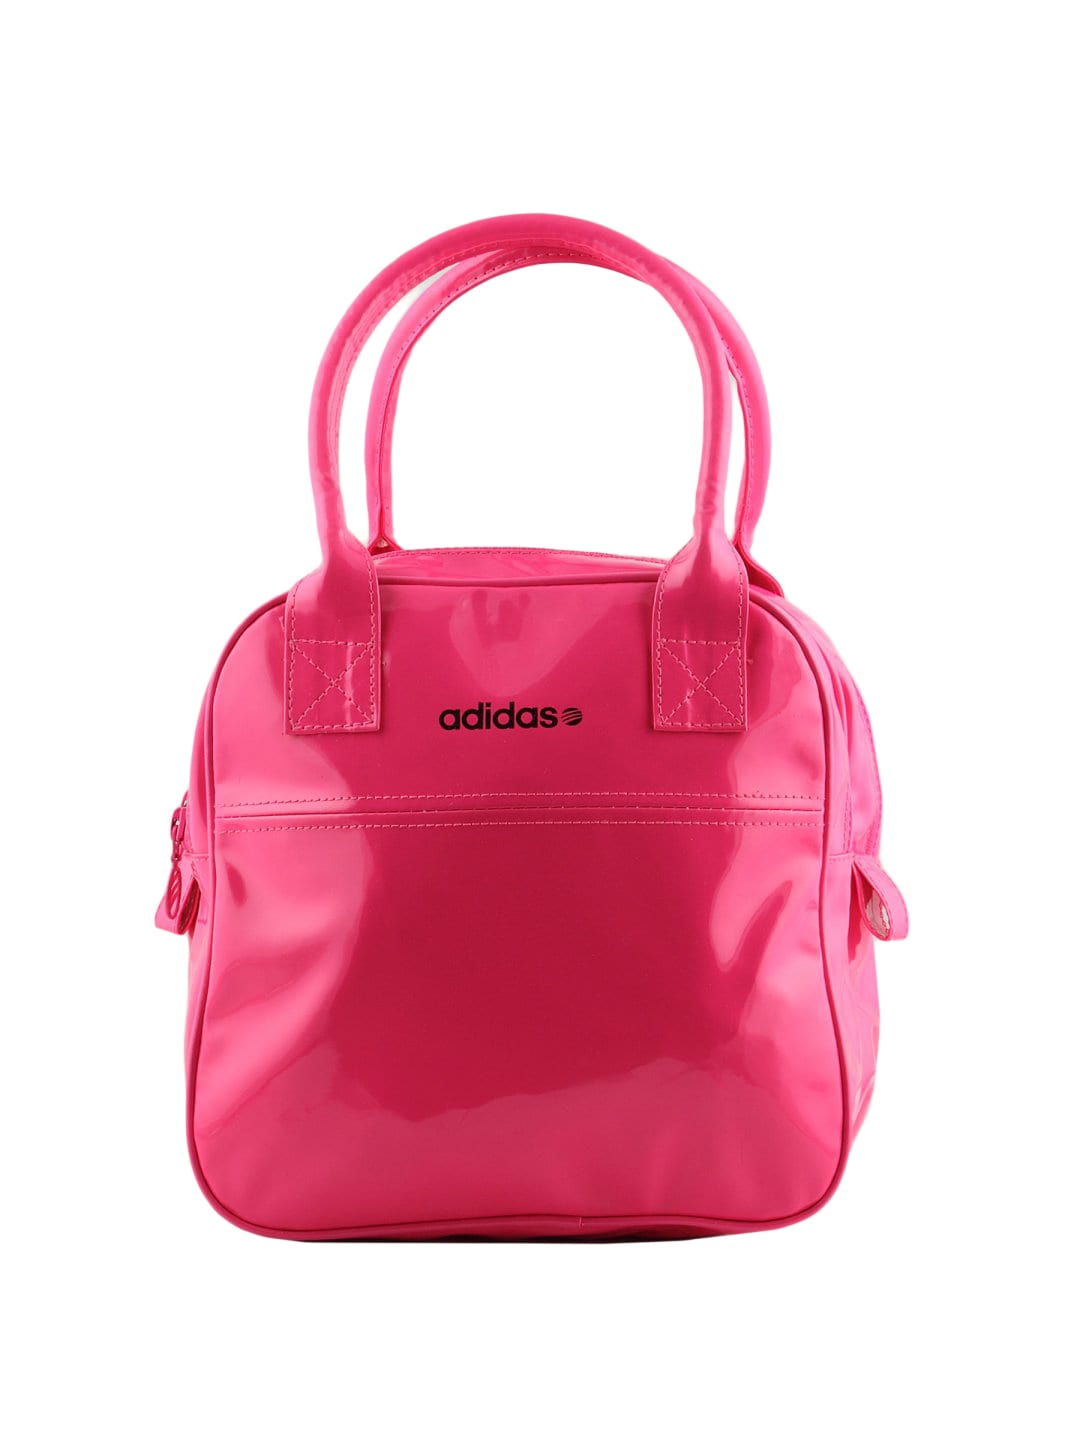 ADIDAS Women Pink Handbag